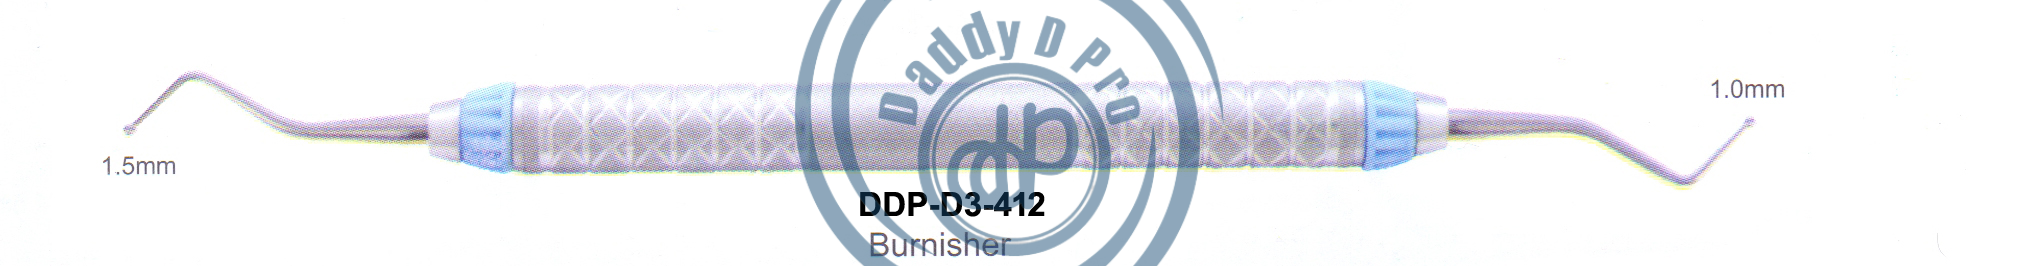 images/DDP-D3-412.png